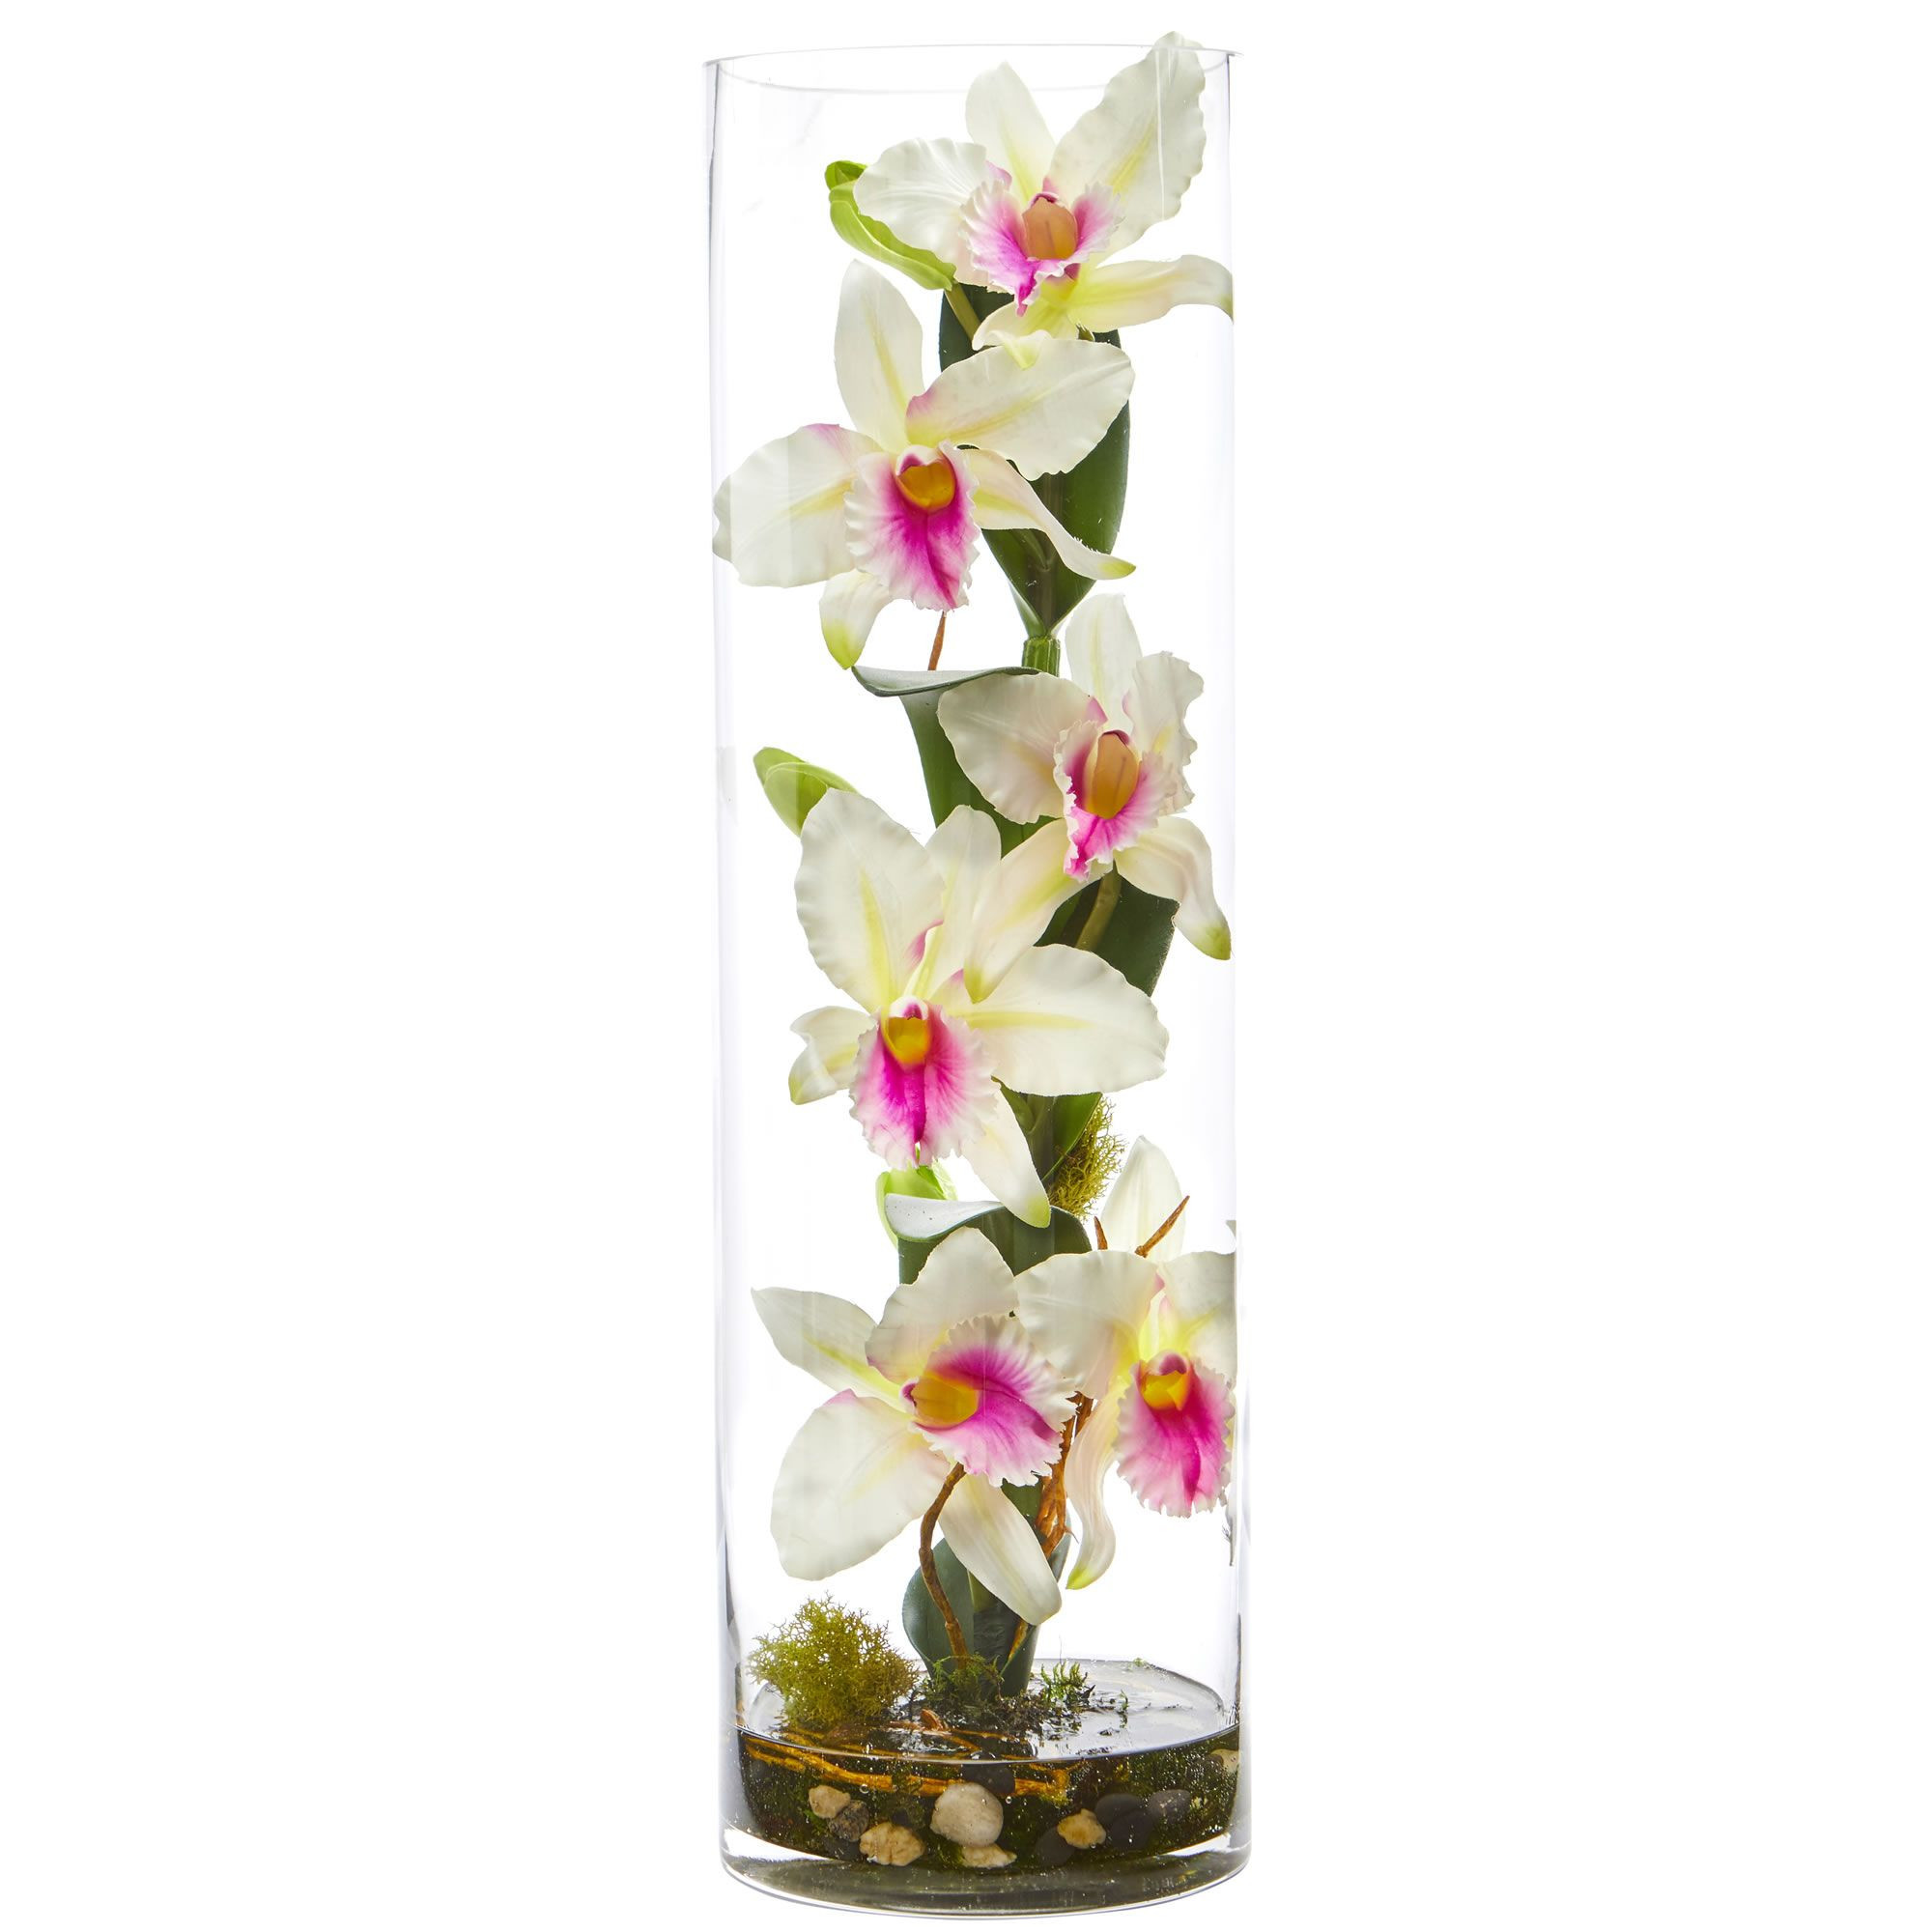 14 Popular White Orchids In Glass Vase Decorative Vase Ideas